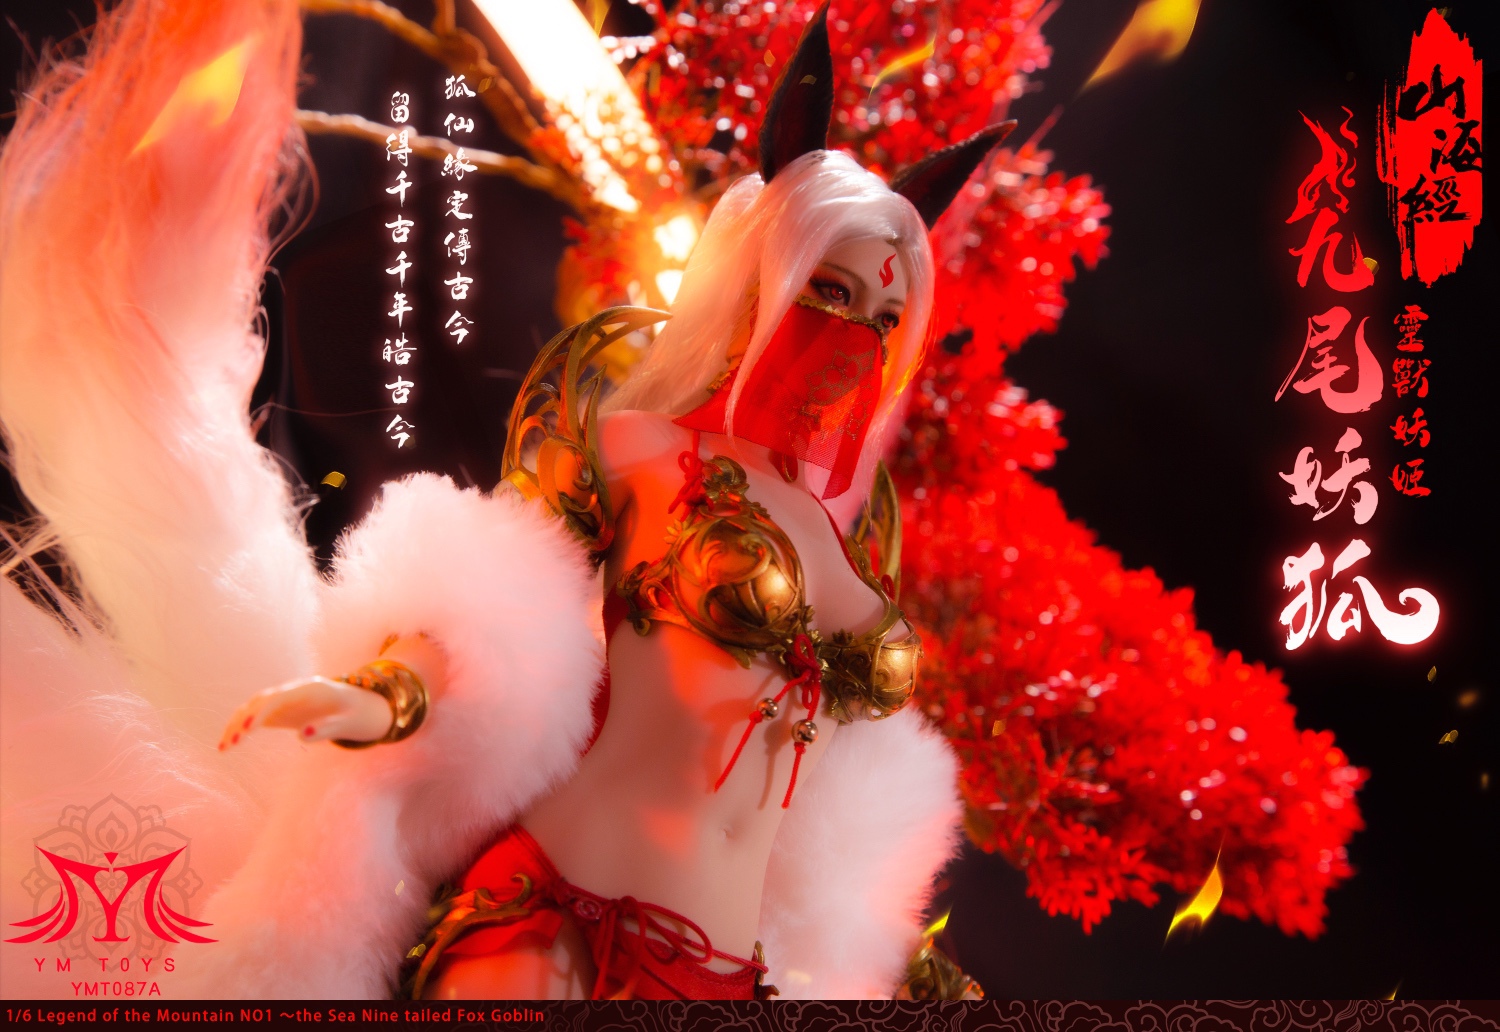 NEW PRODUCT: YMTOYS - Shanhaijing series first bullet - spirit beast demon concubine nine-tailed demon fox 03110